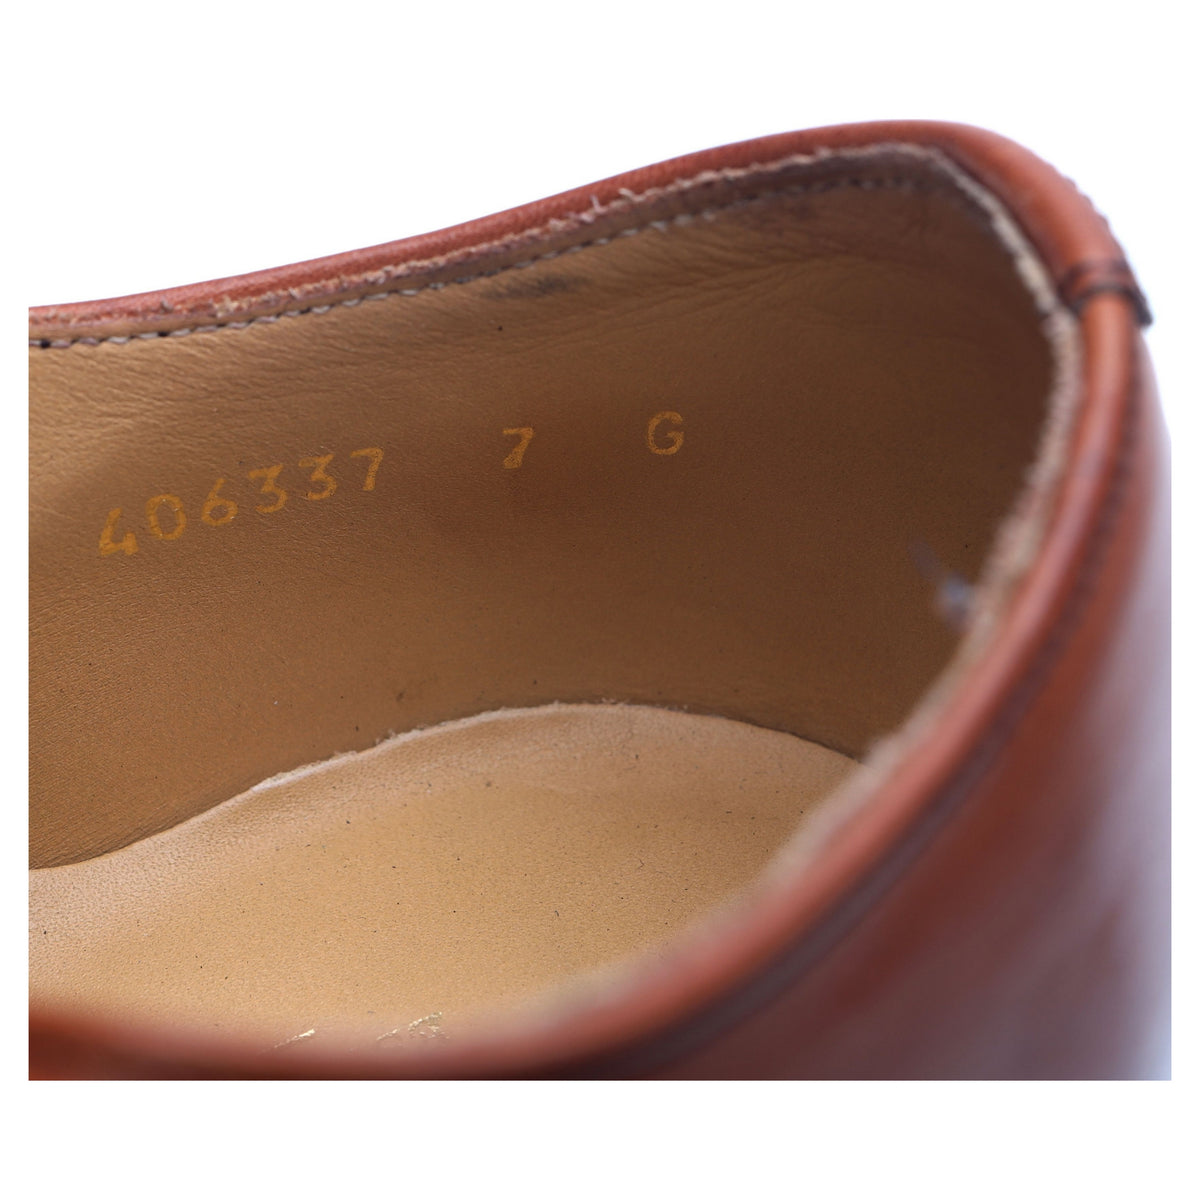 &#39;Duxford&#39; Tan Brown Leather Oxford UK 7 G